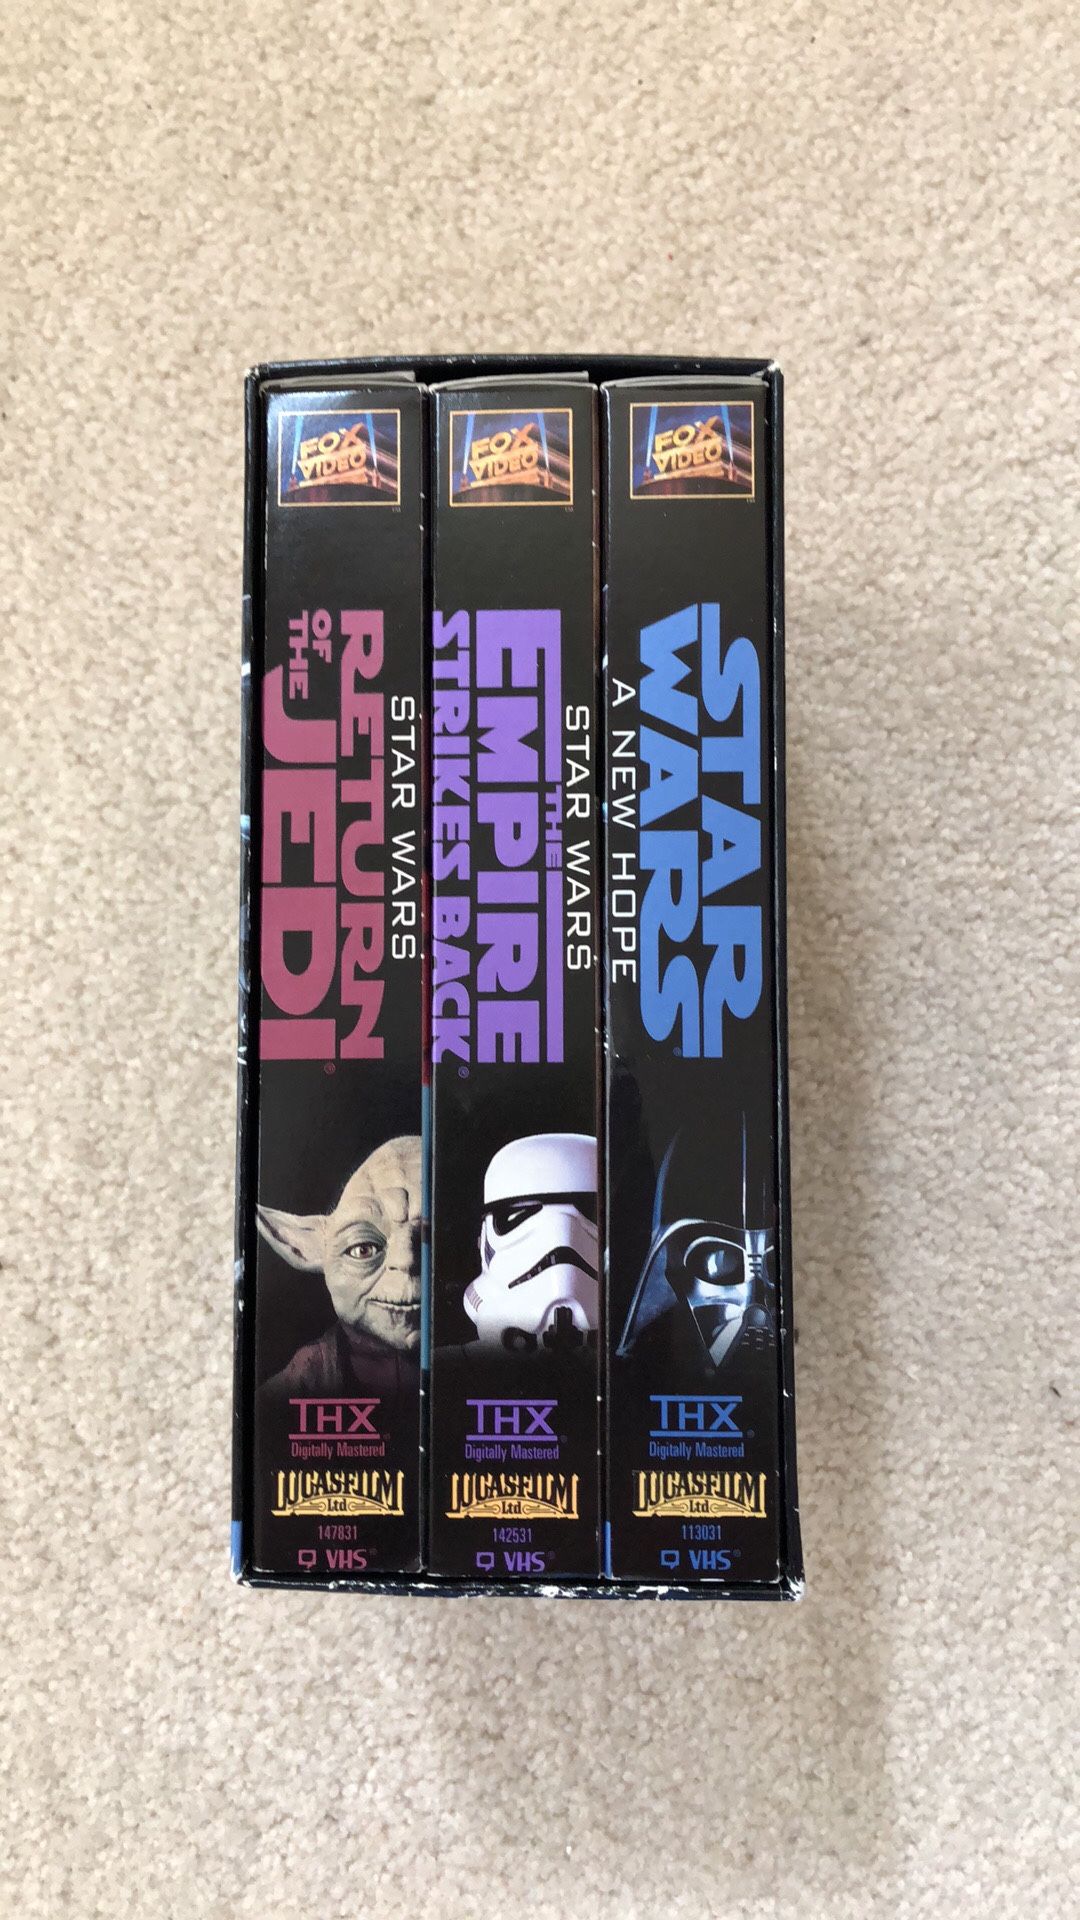 Star Wars Original Trilogy VHS Box Set